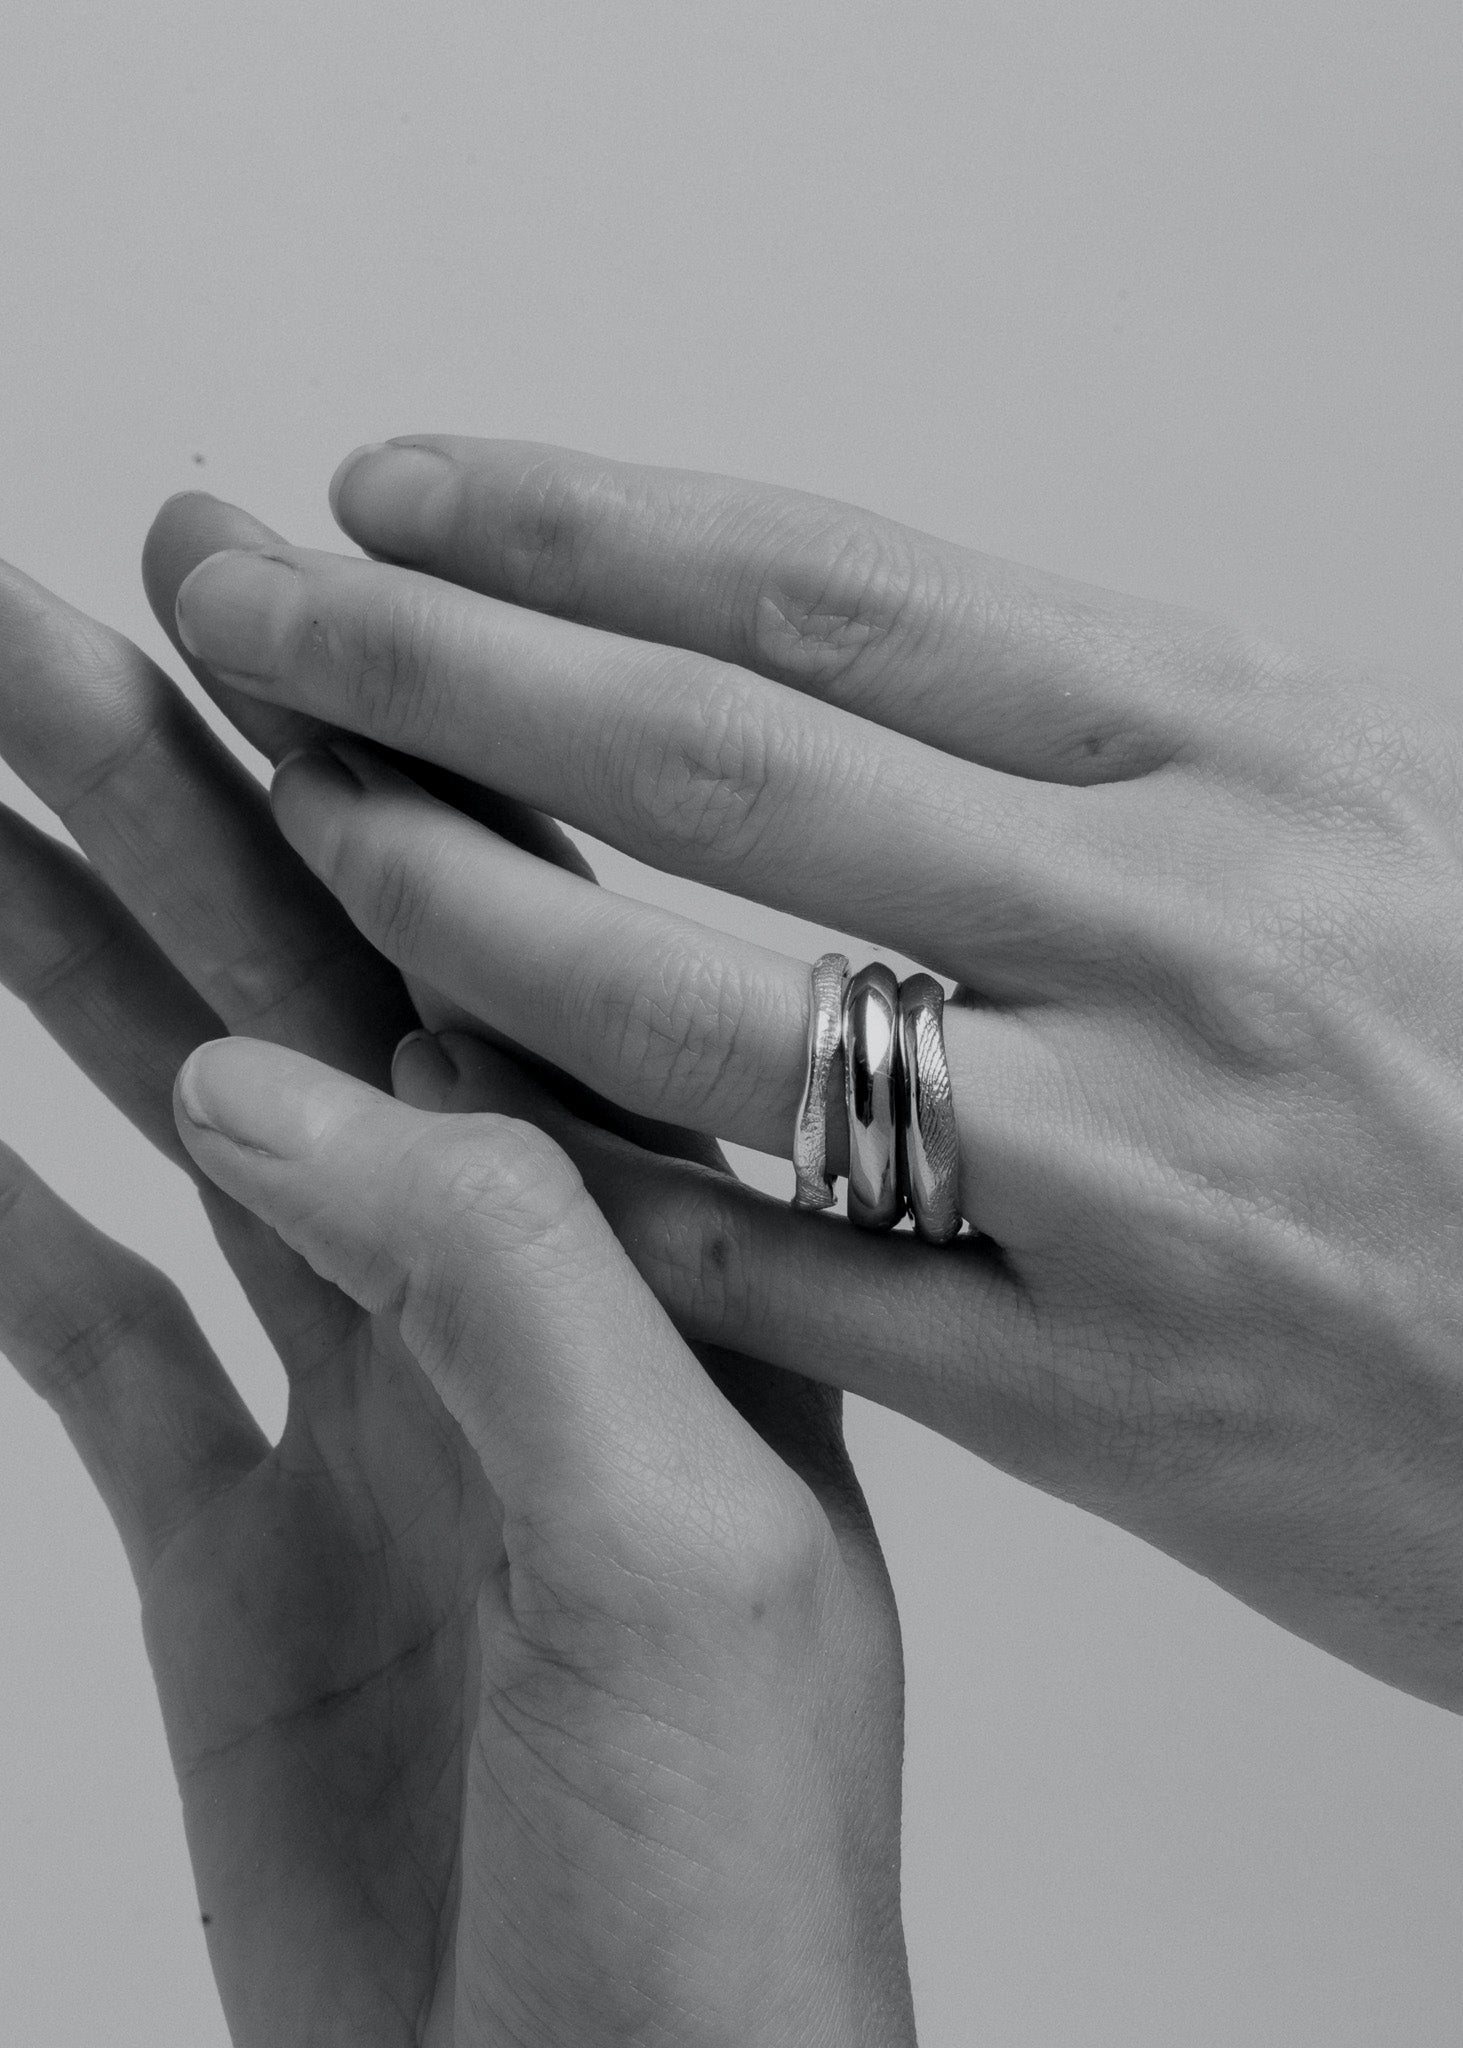 Molded Sculptural Band - Finger imprinted Customised Ring